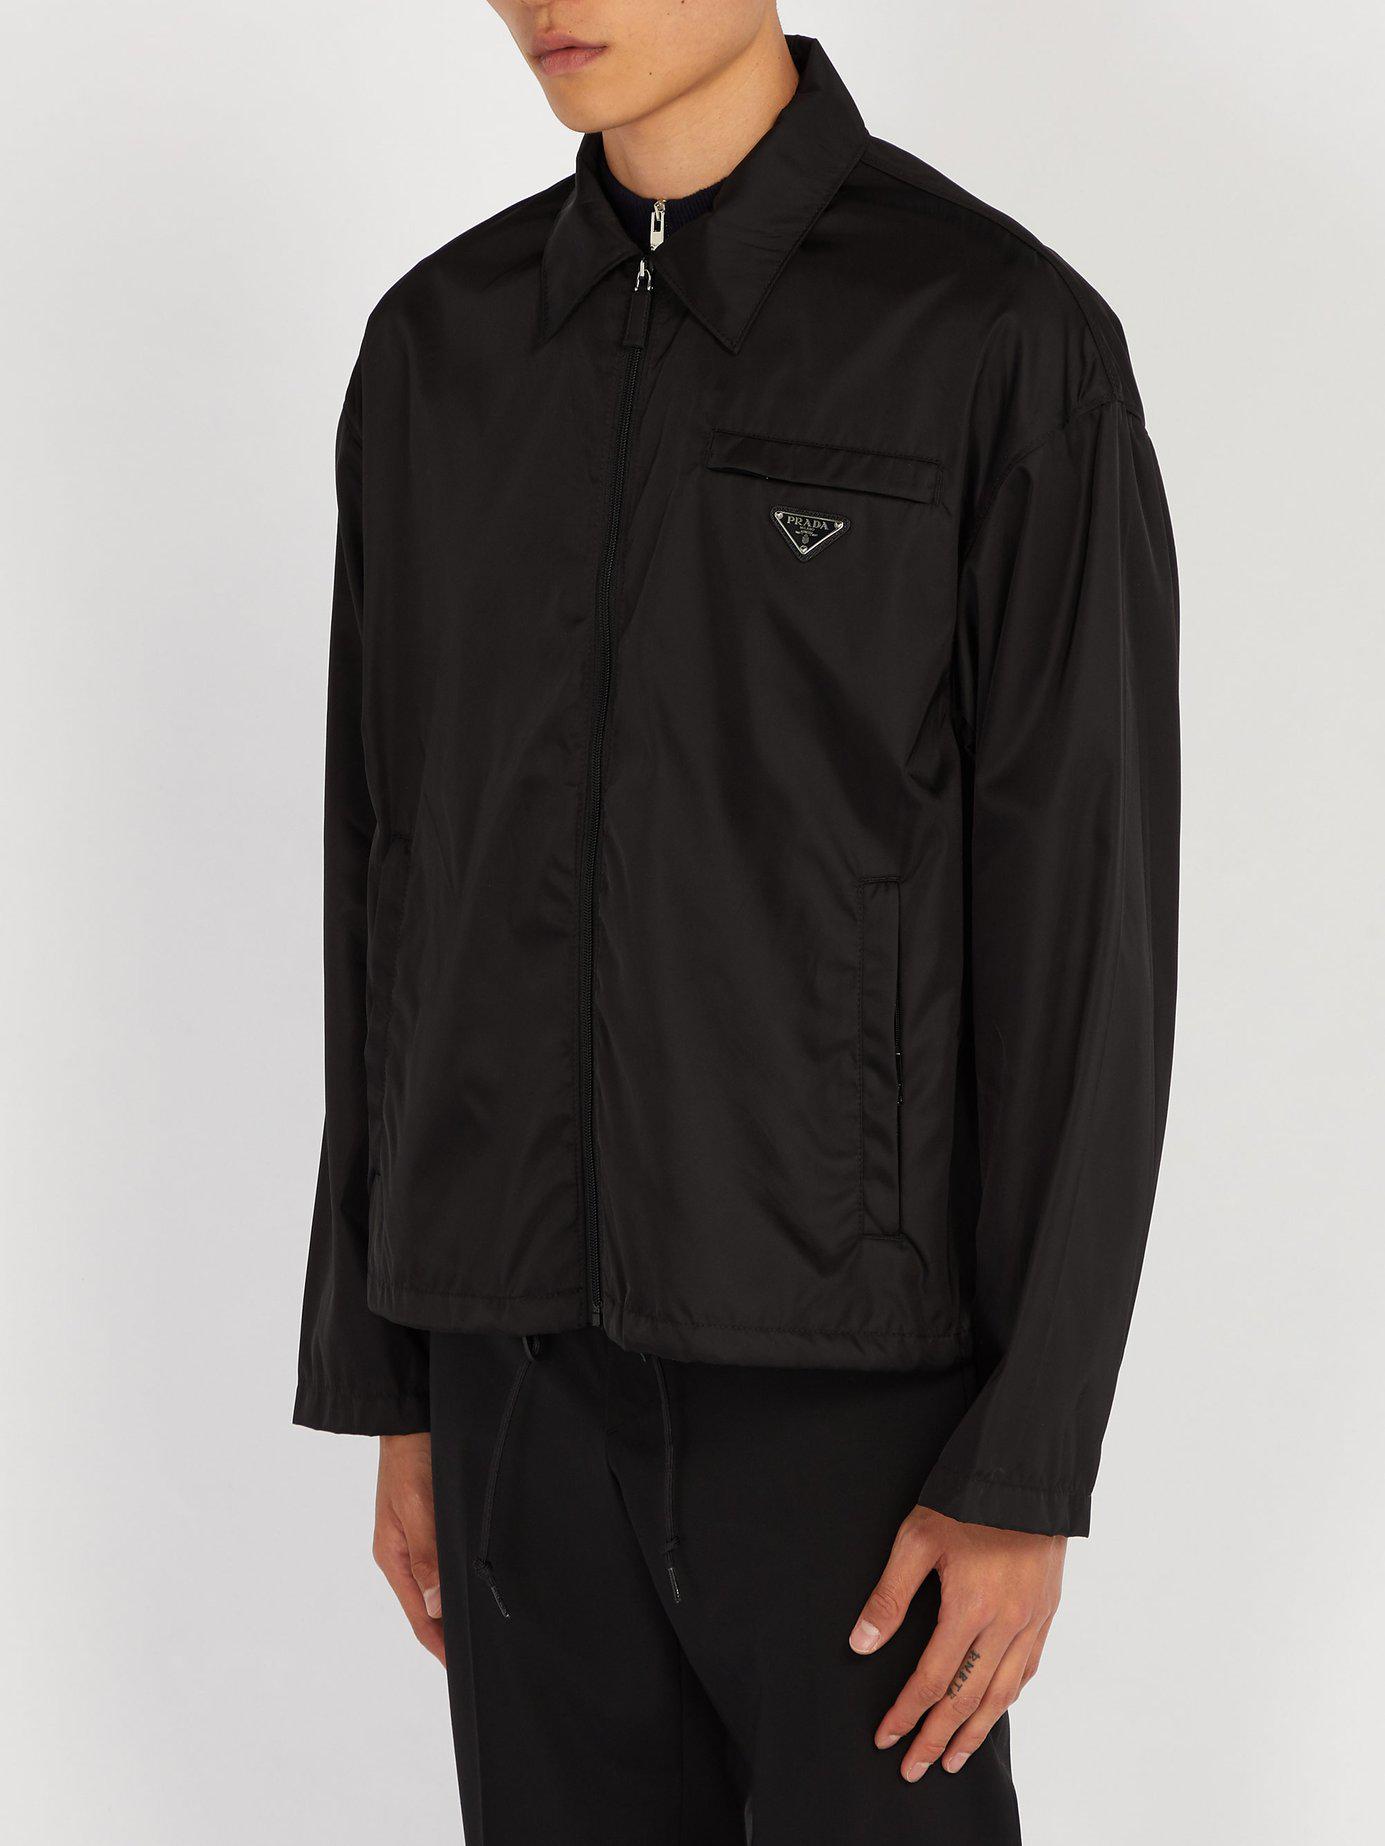 Prada Synthetic Lightweight Nylon Coach Jacket in Black for Men - Lyst